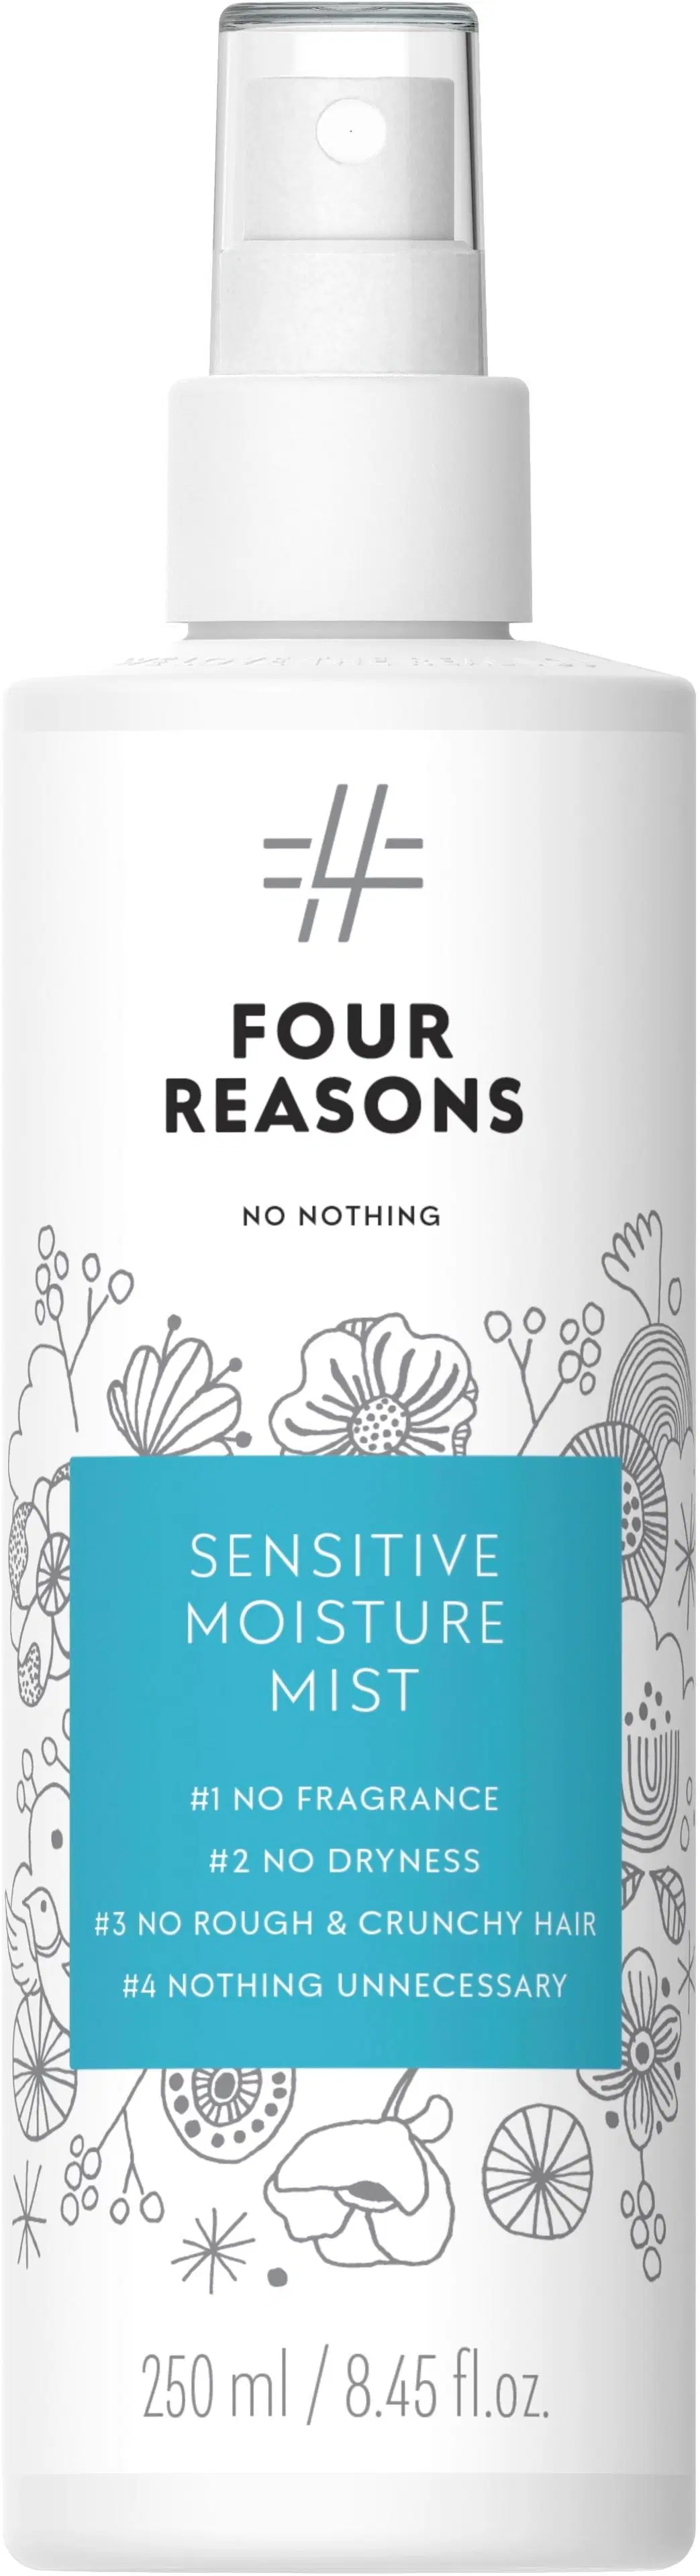 Four Reasons No nothing Sensitive Moisture Mist hoitosuihke 250 ml